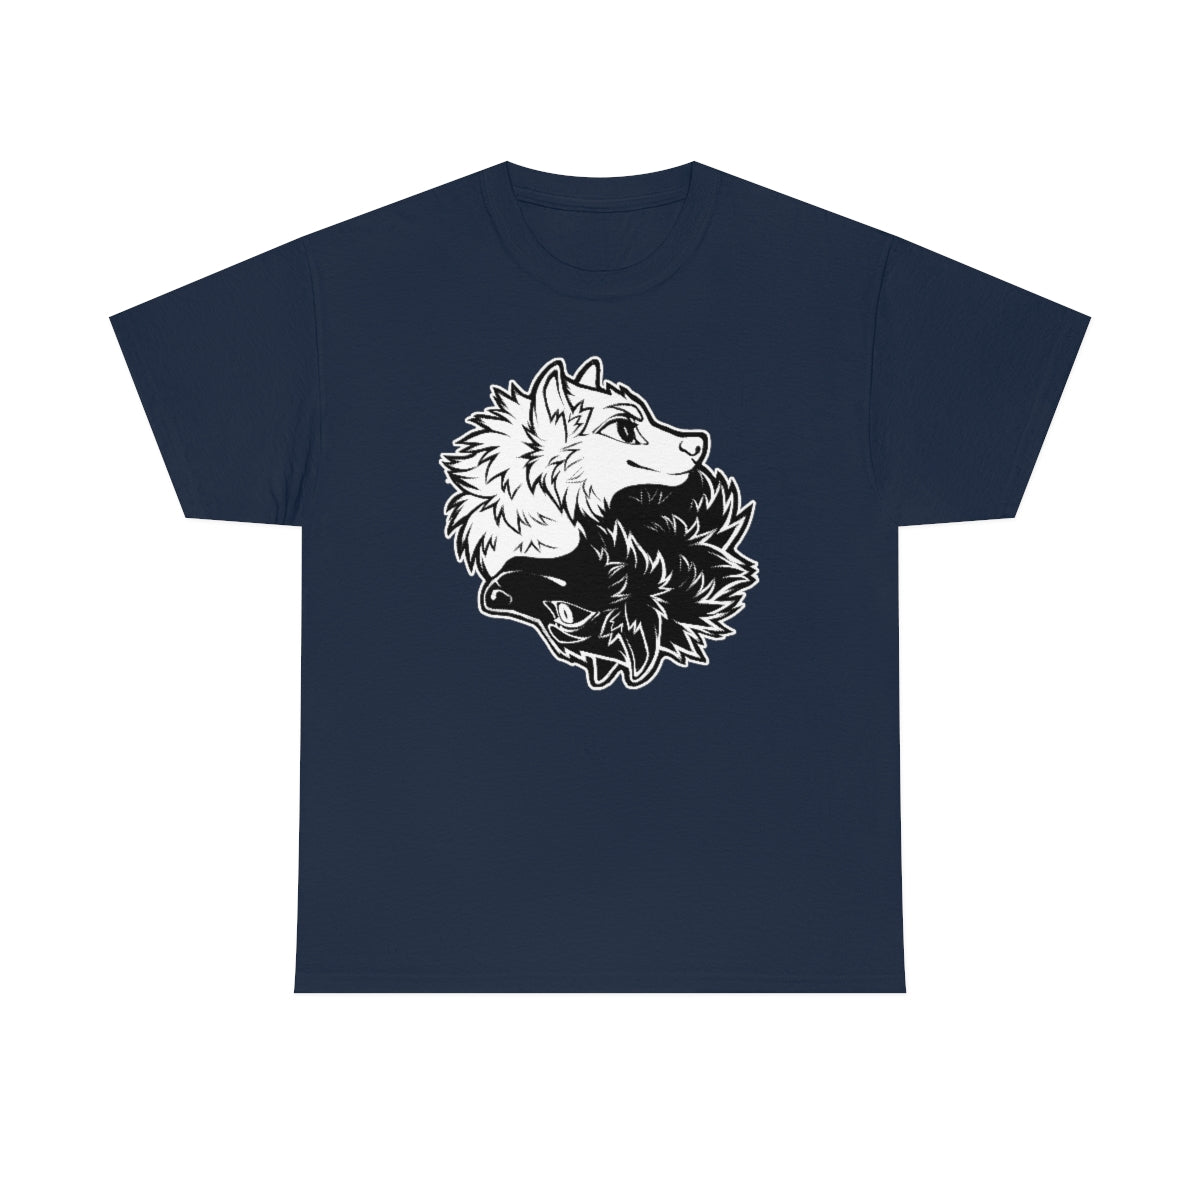 Ying Yang Wolves - T-Shirt T-Shirt Artworktee Navy Blue S 